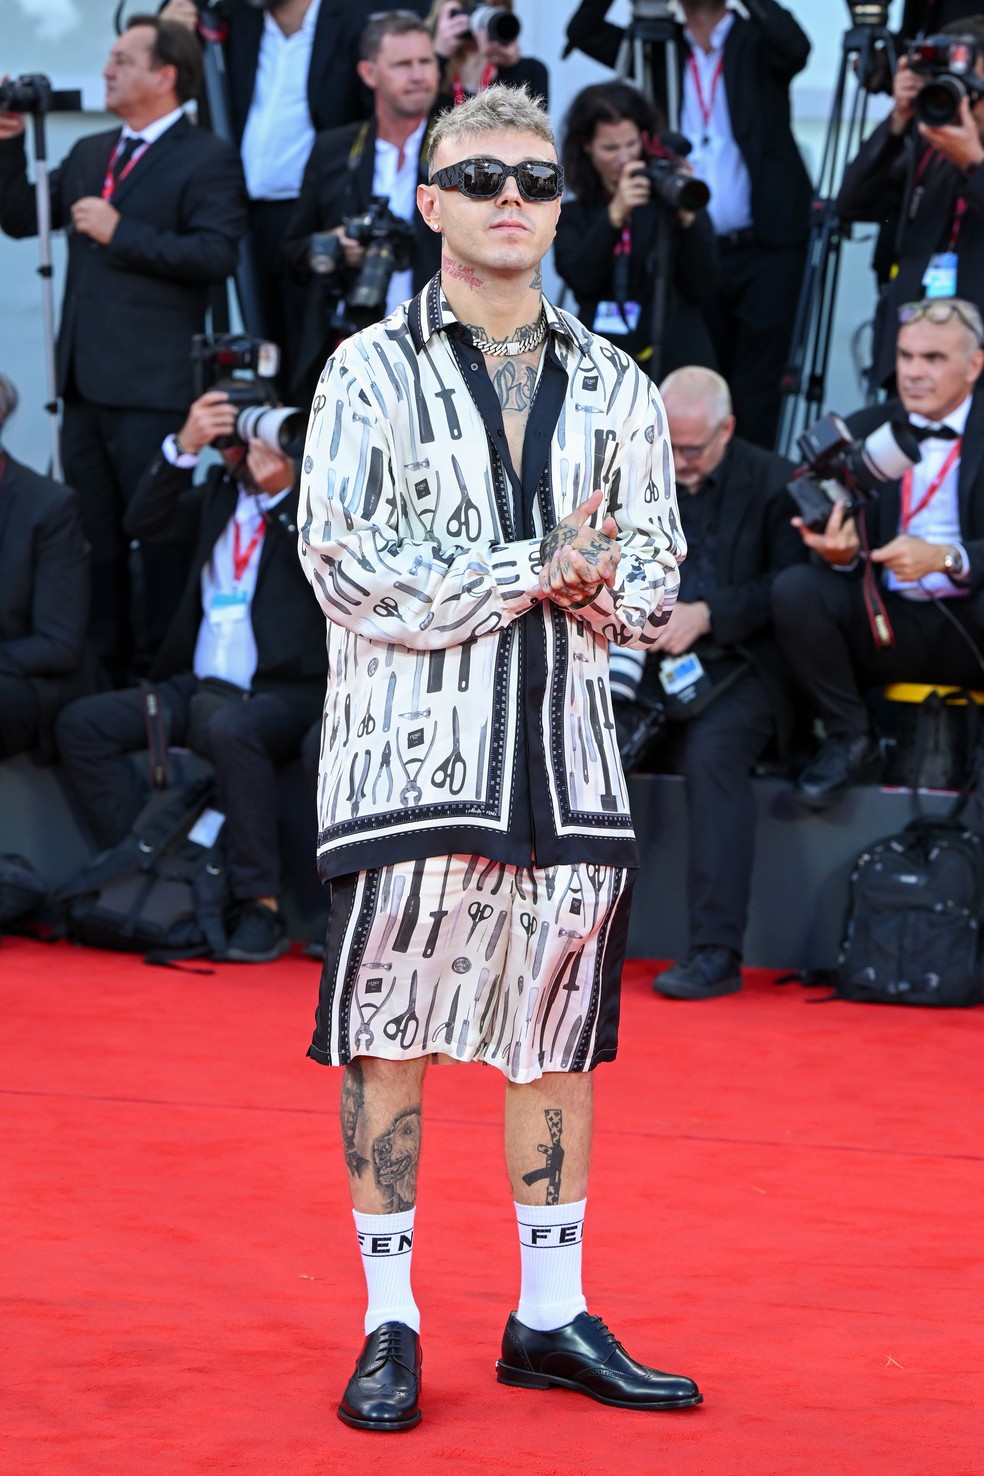 Rapper italiano Lazza no Festival de Cinema de Veneza — Foto: Stephane Cardinale - Corbis/Corbis via Getty Images